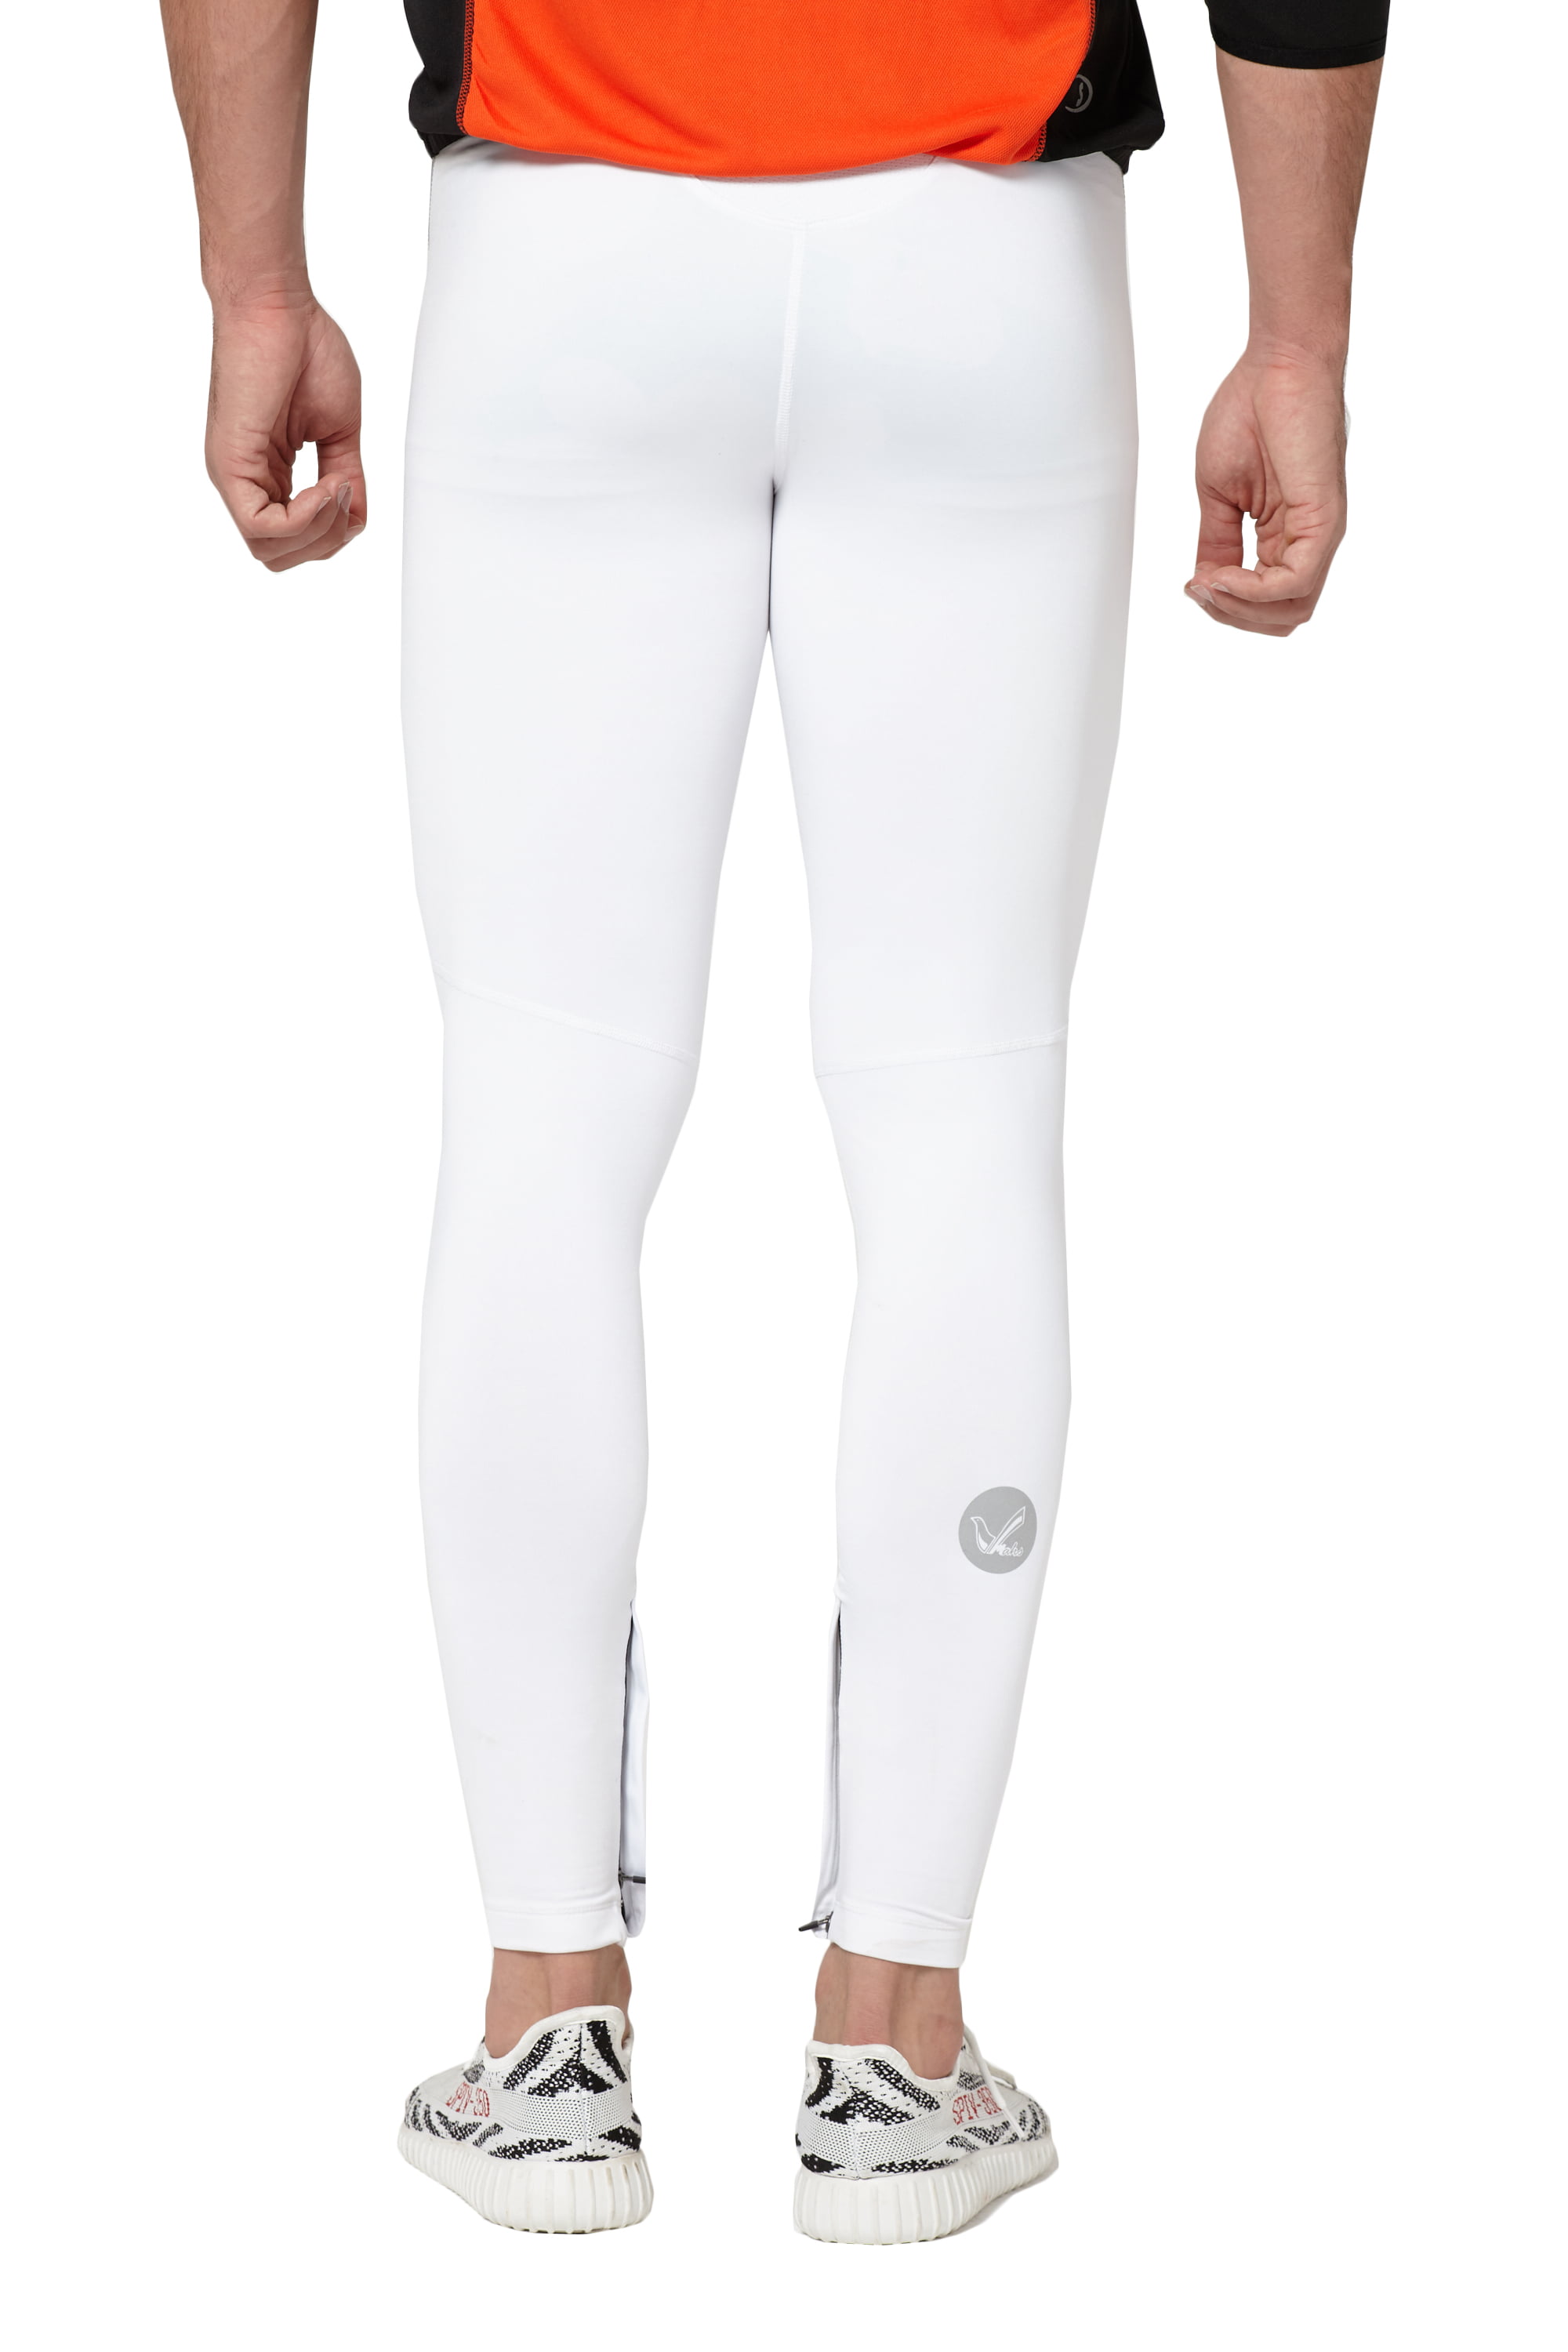 L. RUN TIGHTS WINTER PROTECTION Thermal leggings - Women - Diadora Online  Store US